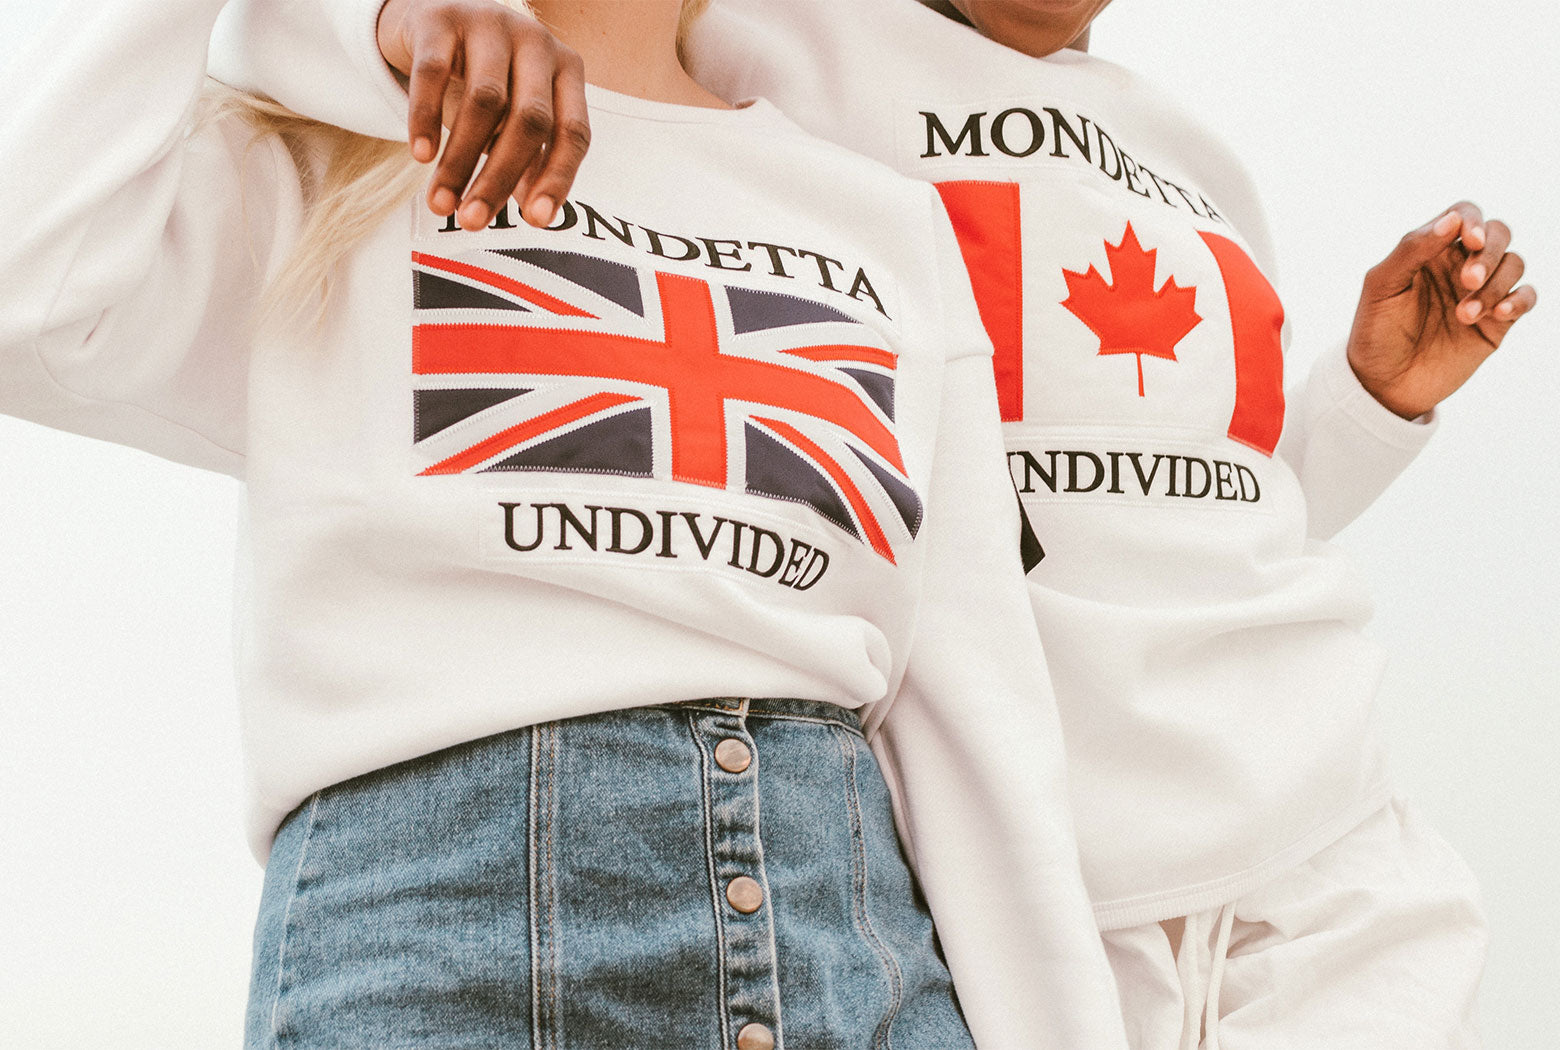 Mondetta Union Sweatshirt  Sweatshirts, Fashion revolution